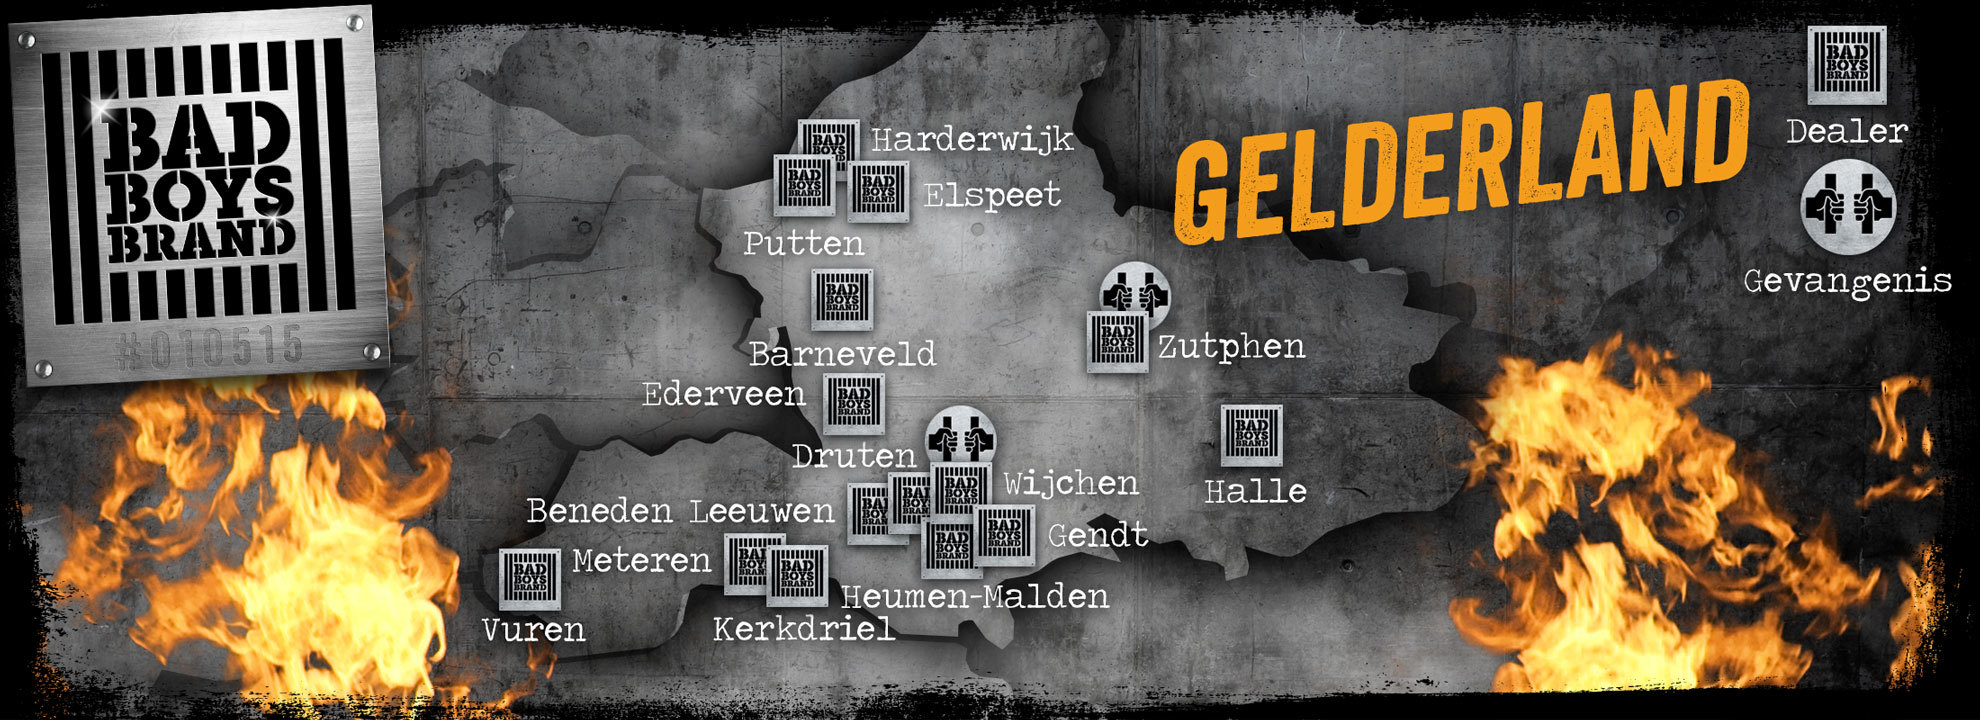 Dealers Gelderland